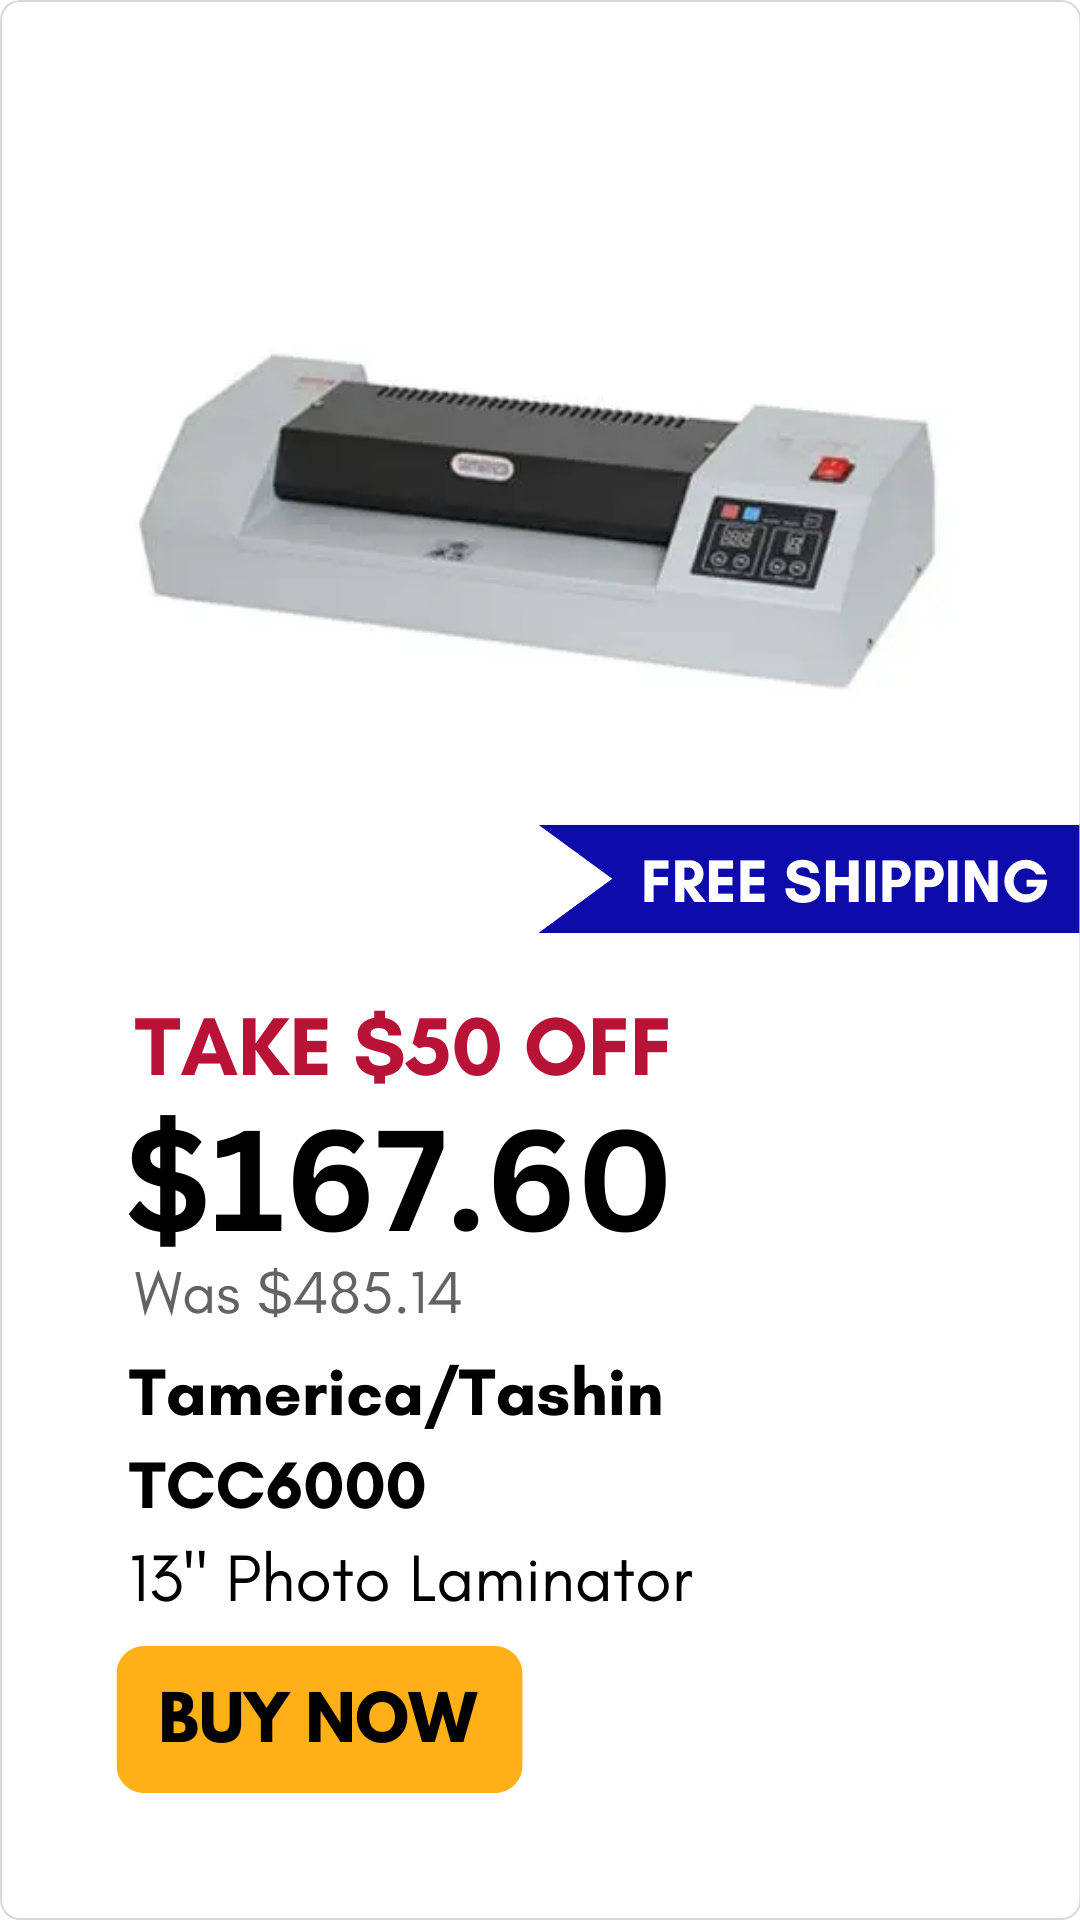 Tamerica / Tashin TCC6000 13" Professional Photo Laminator on sale for 18% off and free shipping!